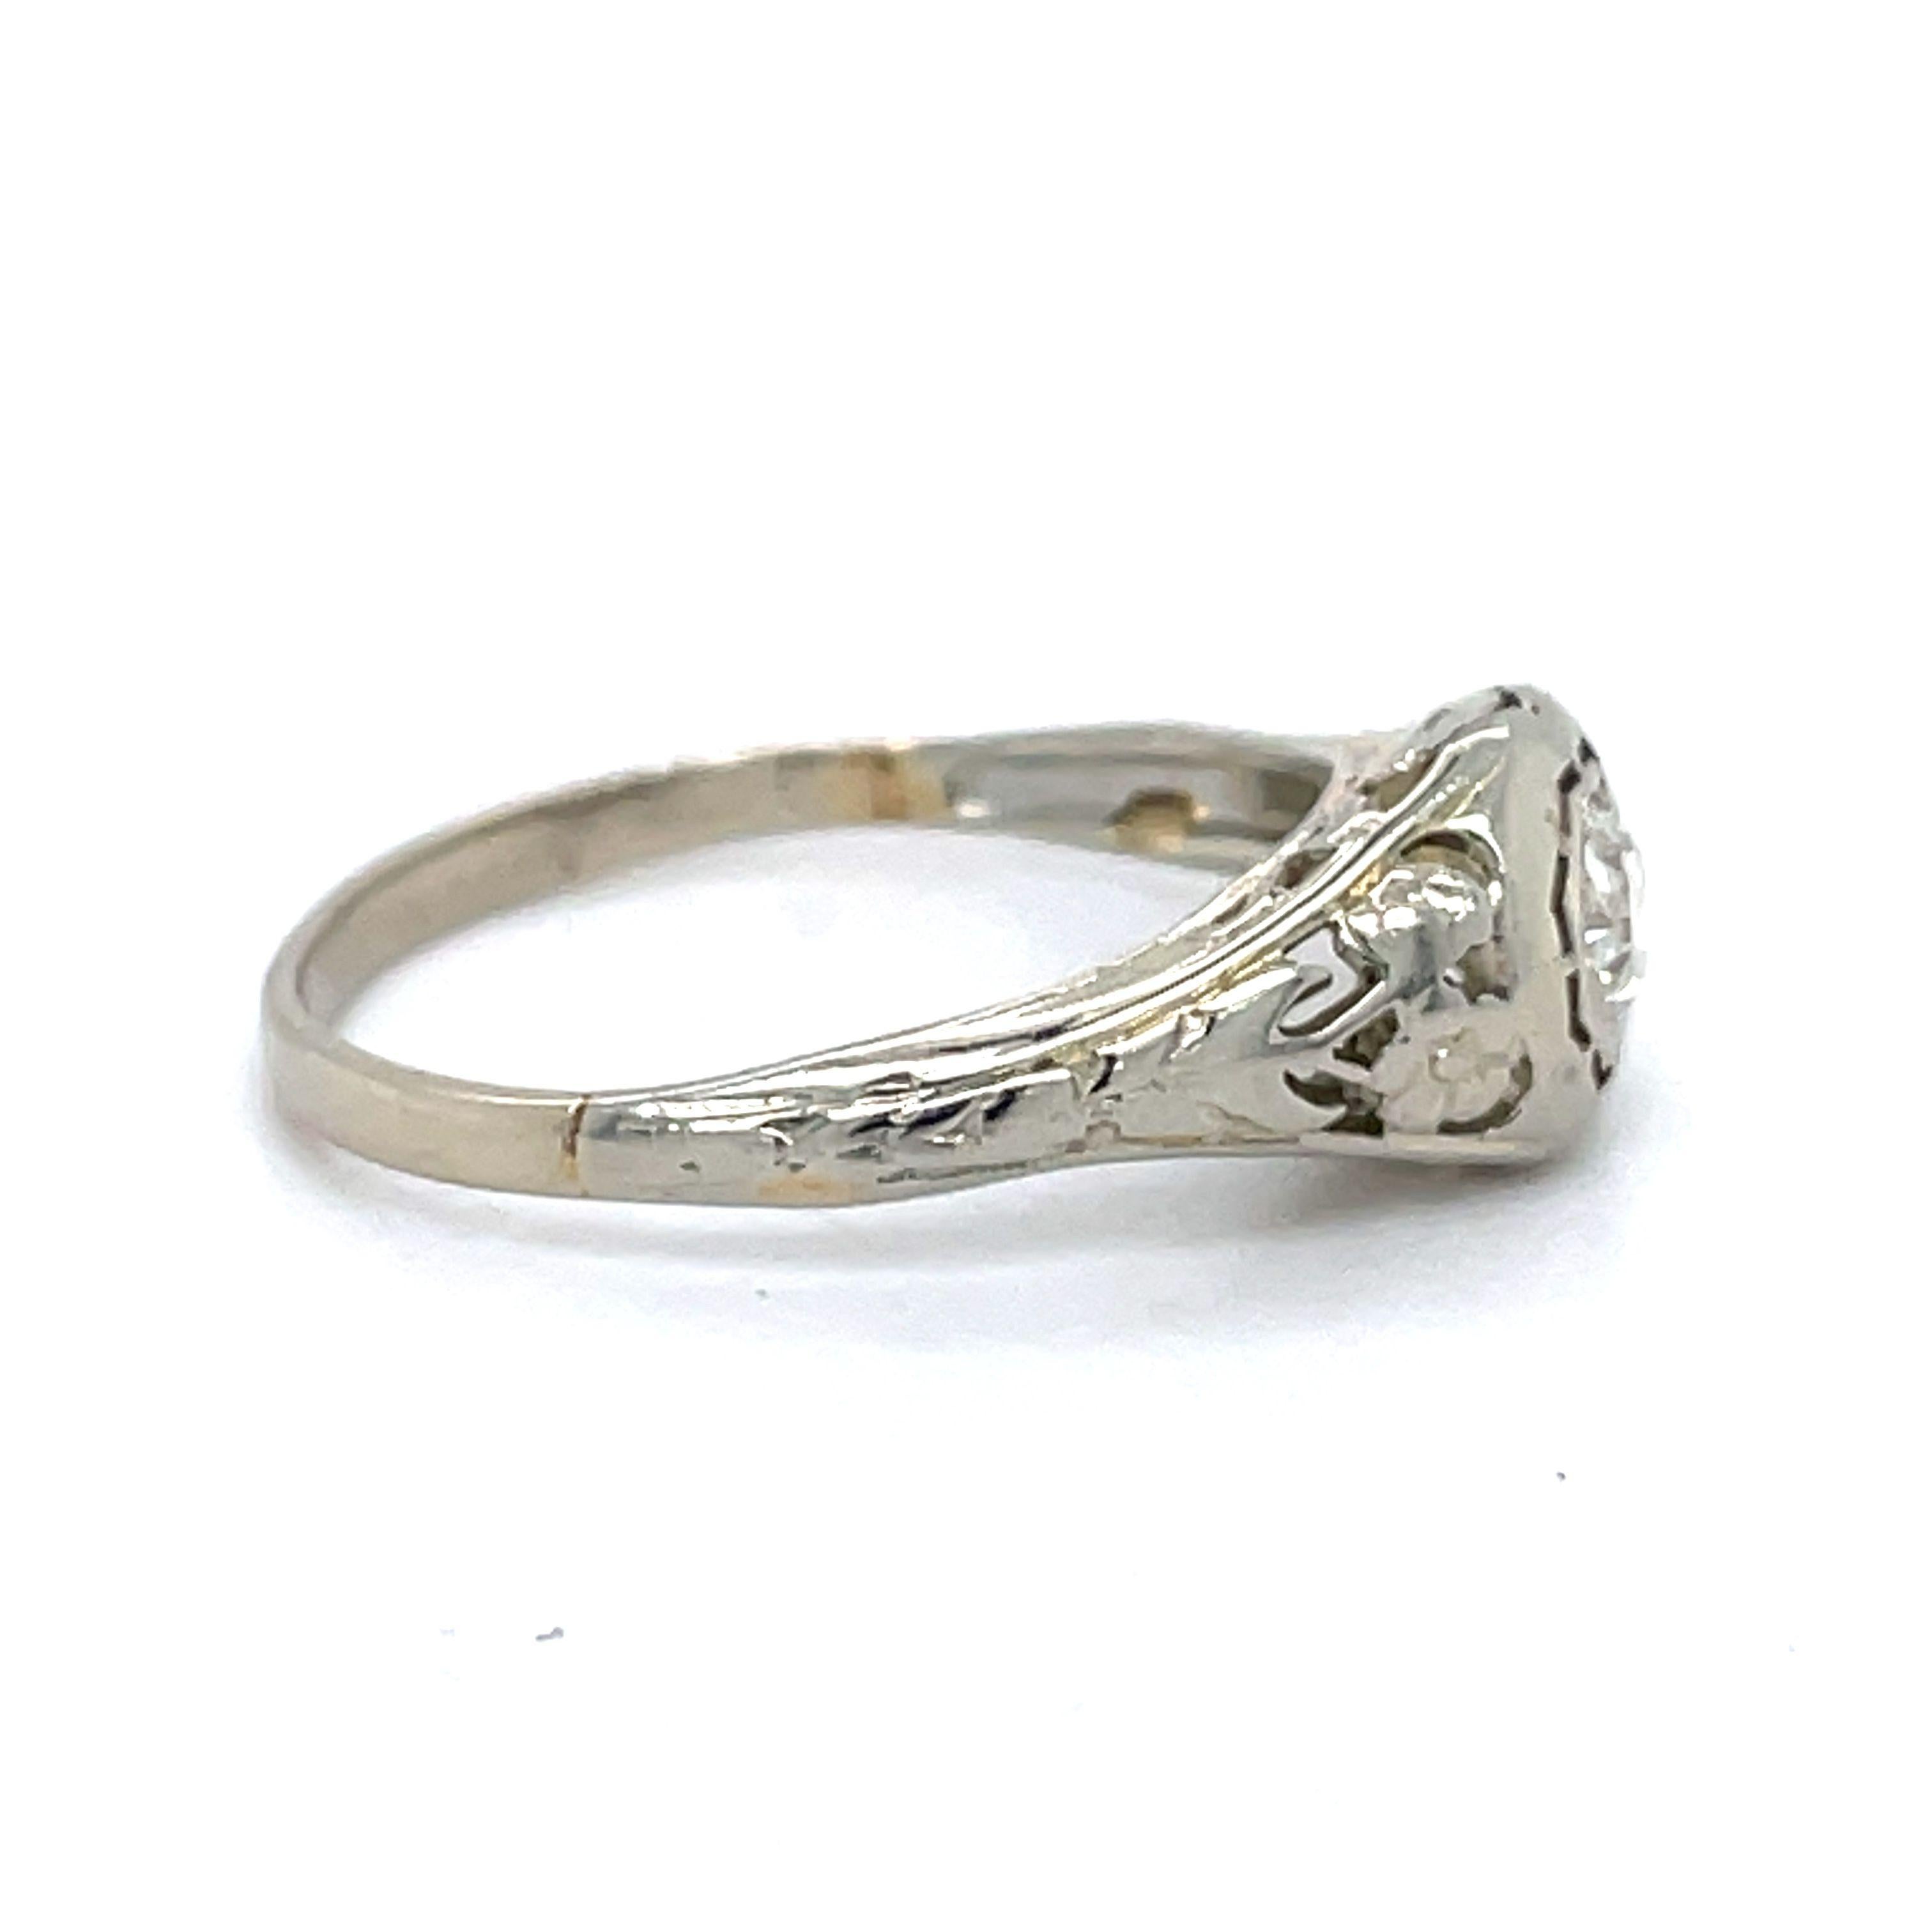 Old European Cut Dome Filigree Ring - 18K White gold dome ring, 0.15ct old European cut diamond For Sale